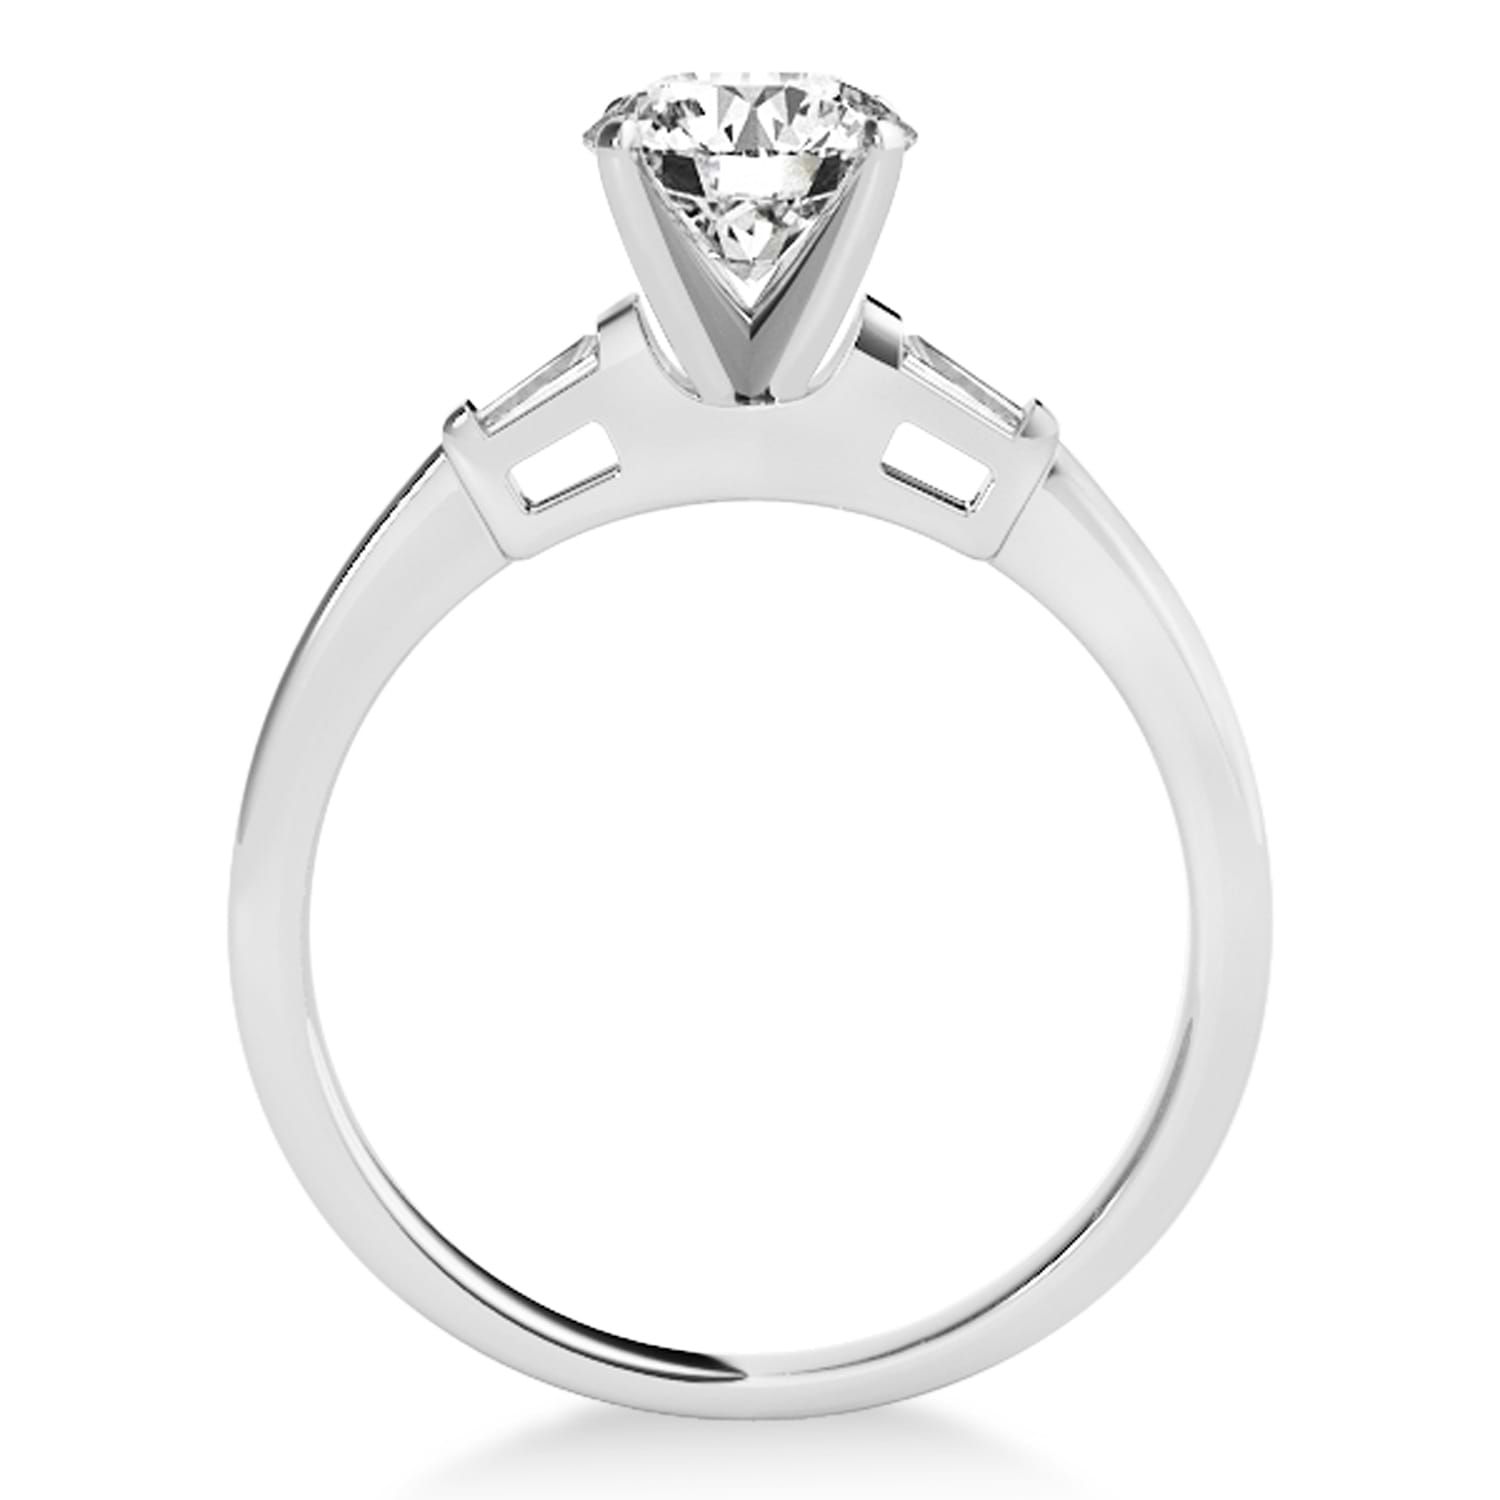 Tapered Baguette 3-Stone Diamond Engagement Ring 14k White Gold (0.10ct)